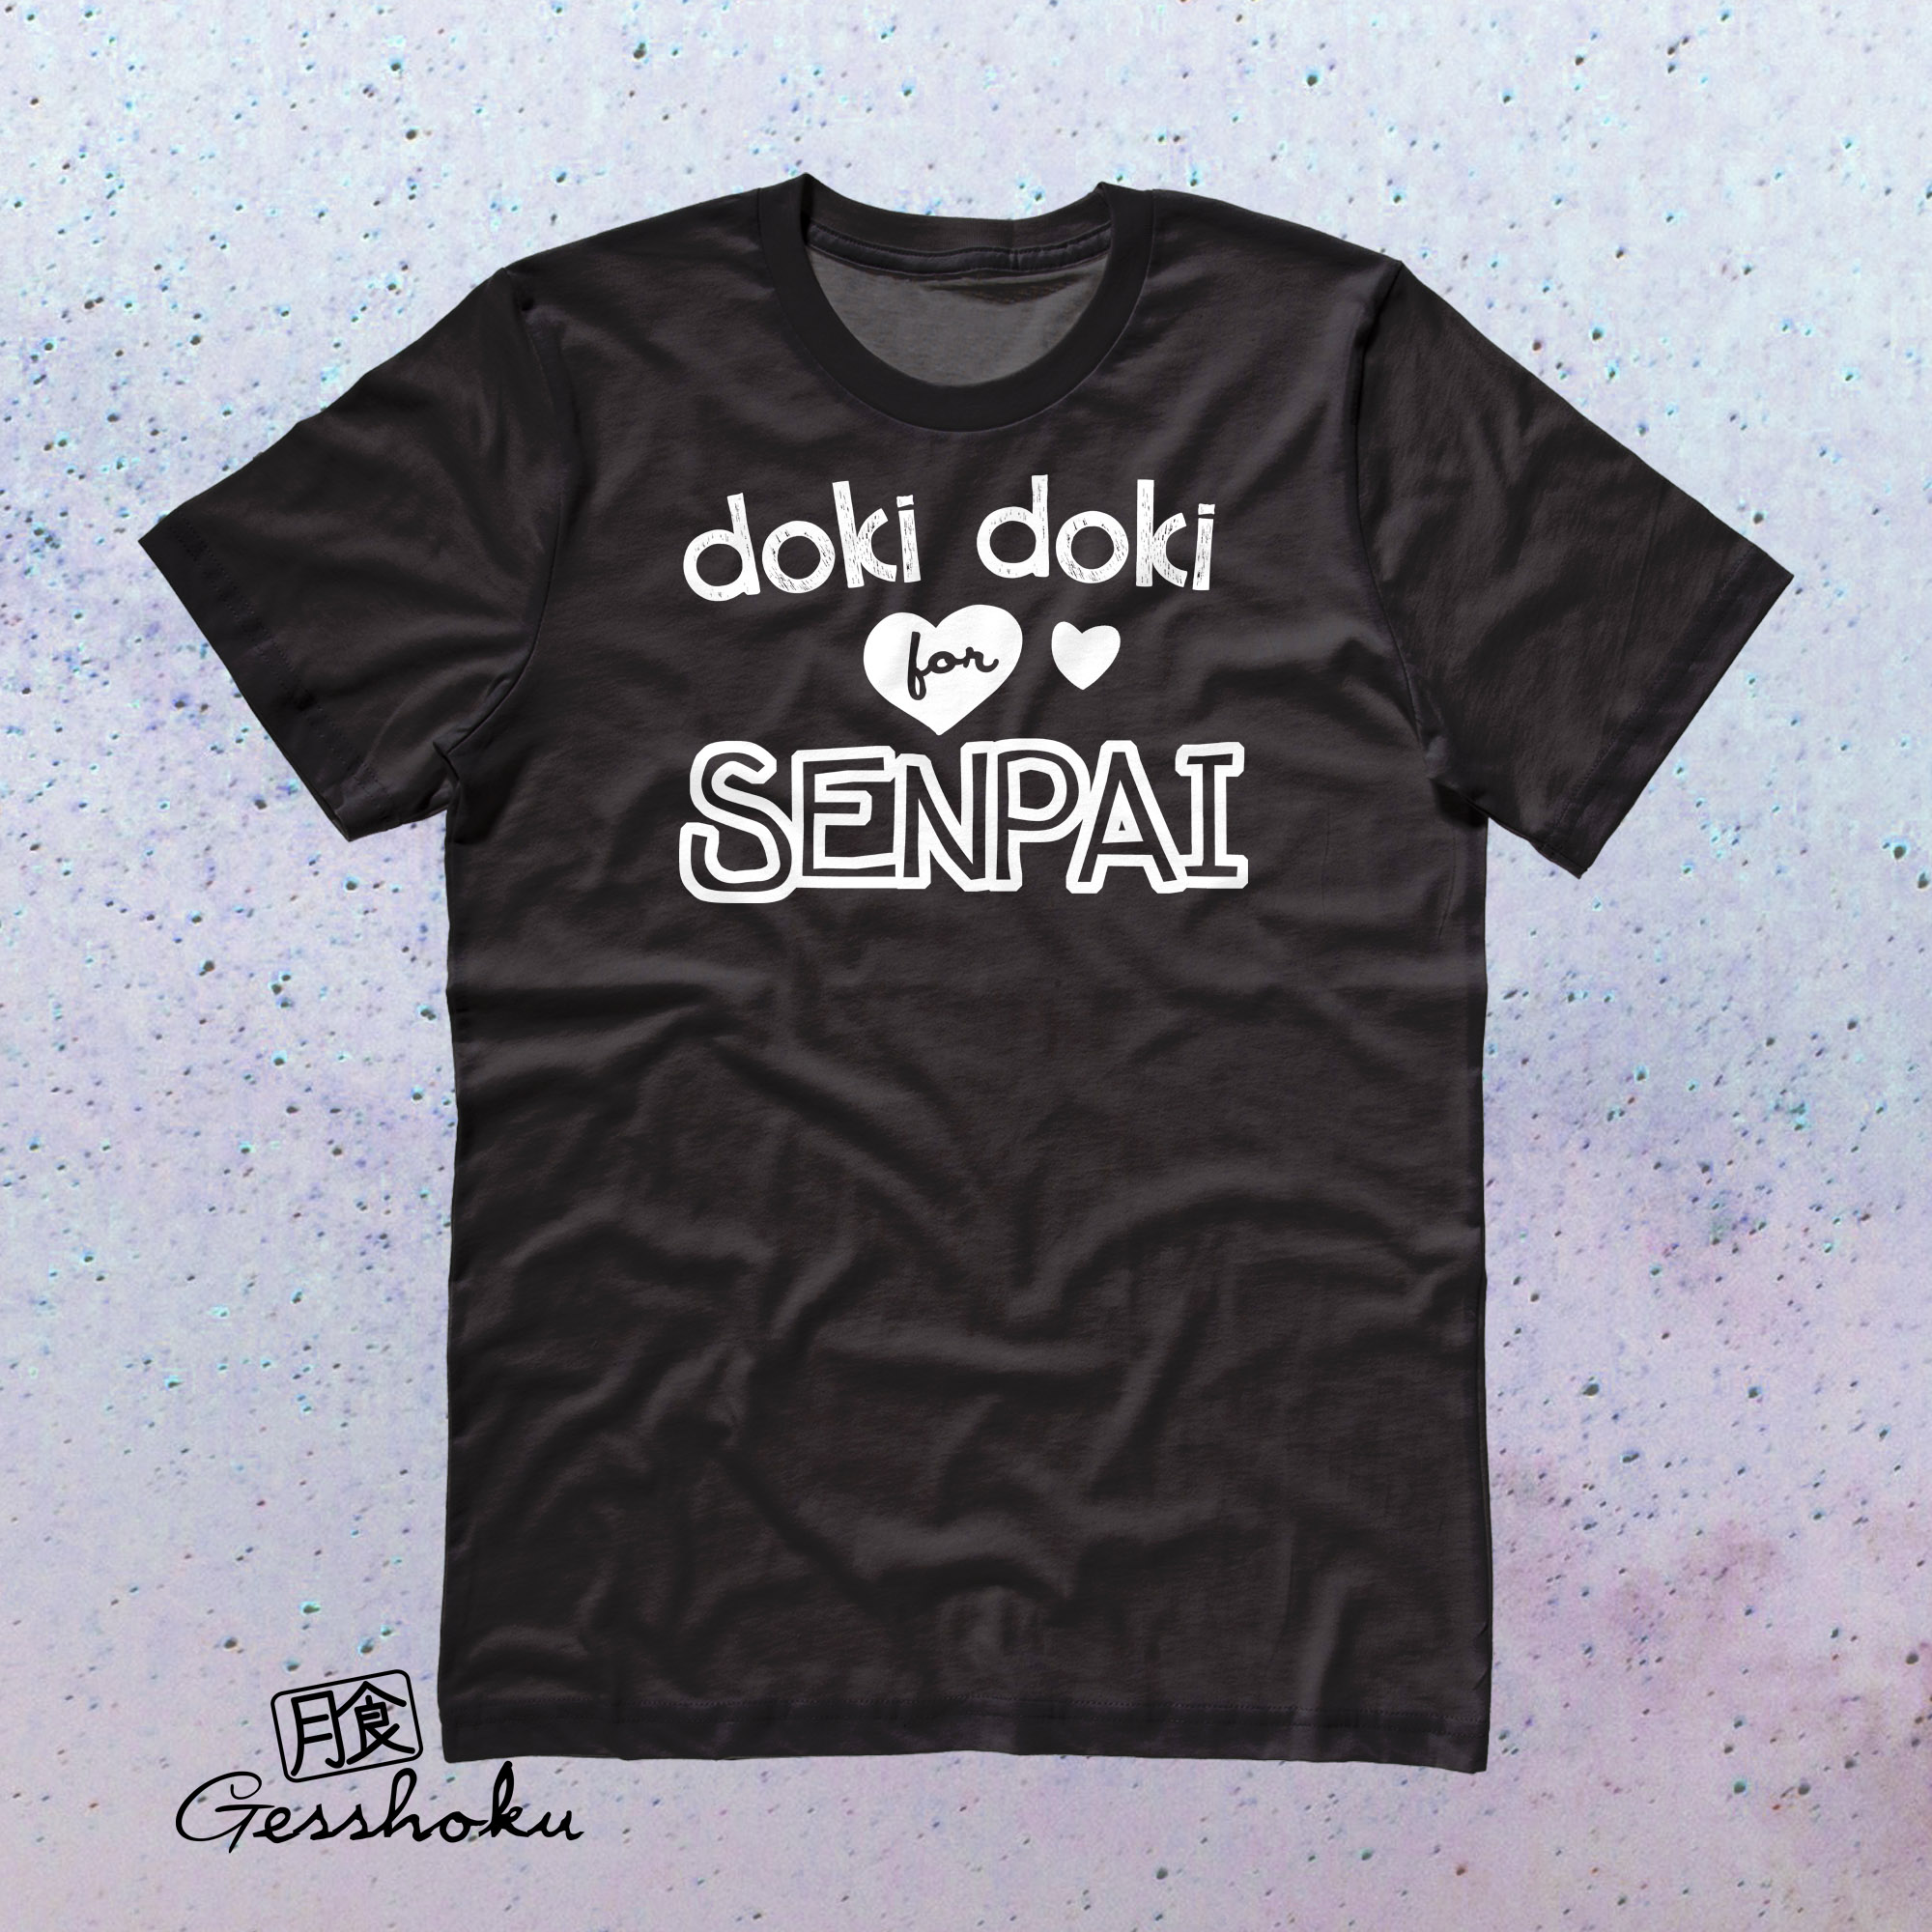 Doki Doki for Senpai T-shirt - Black